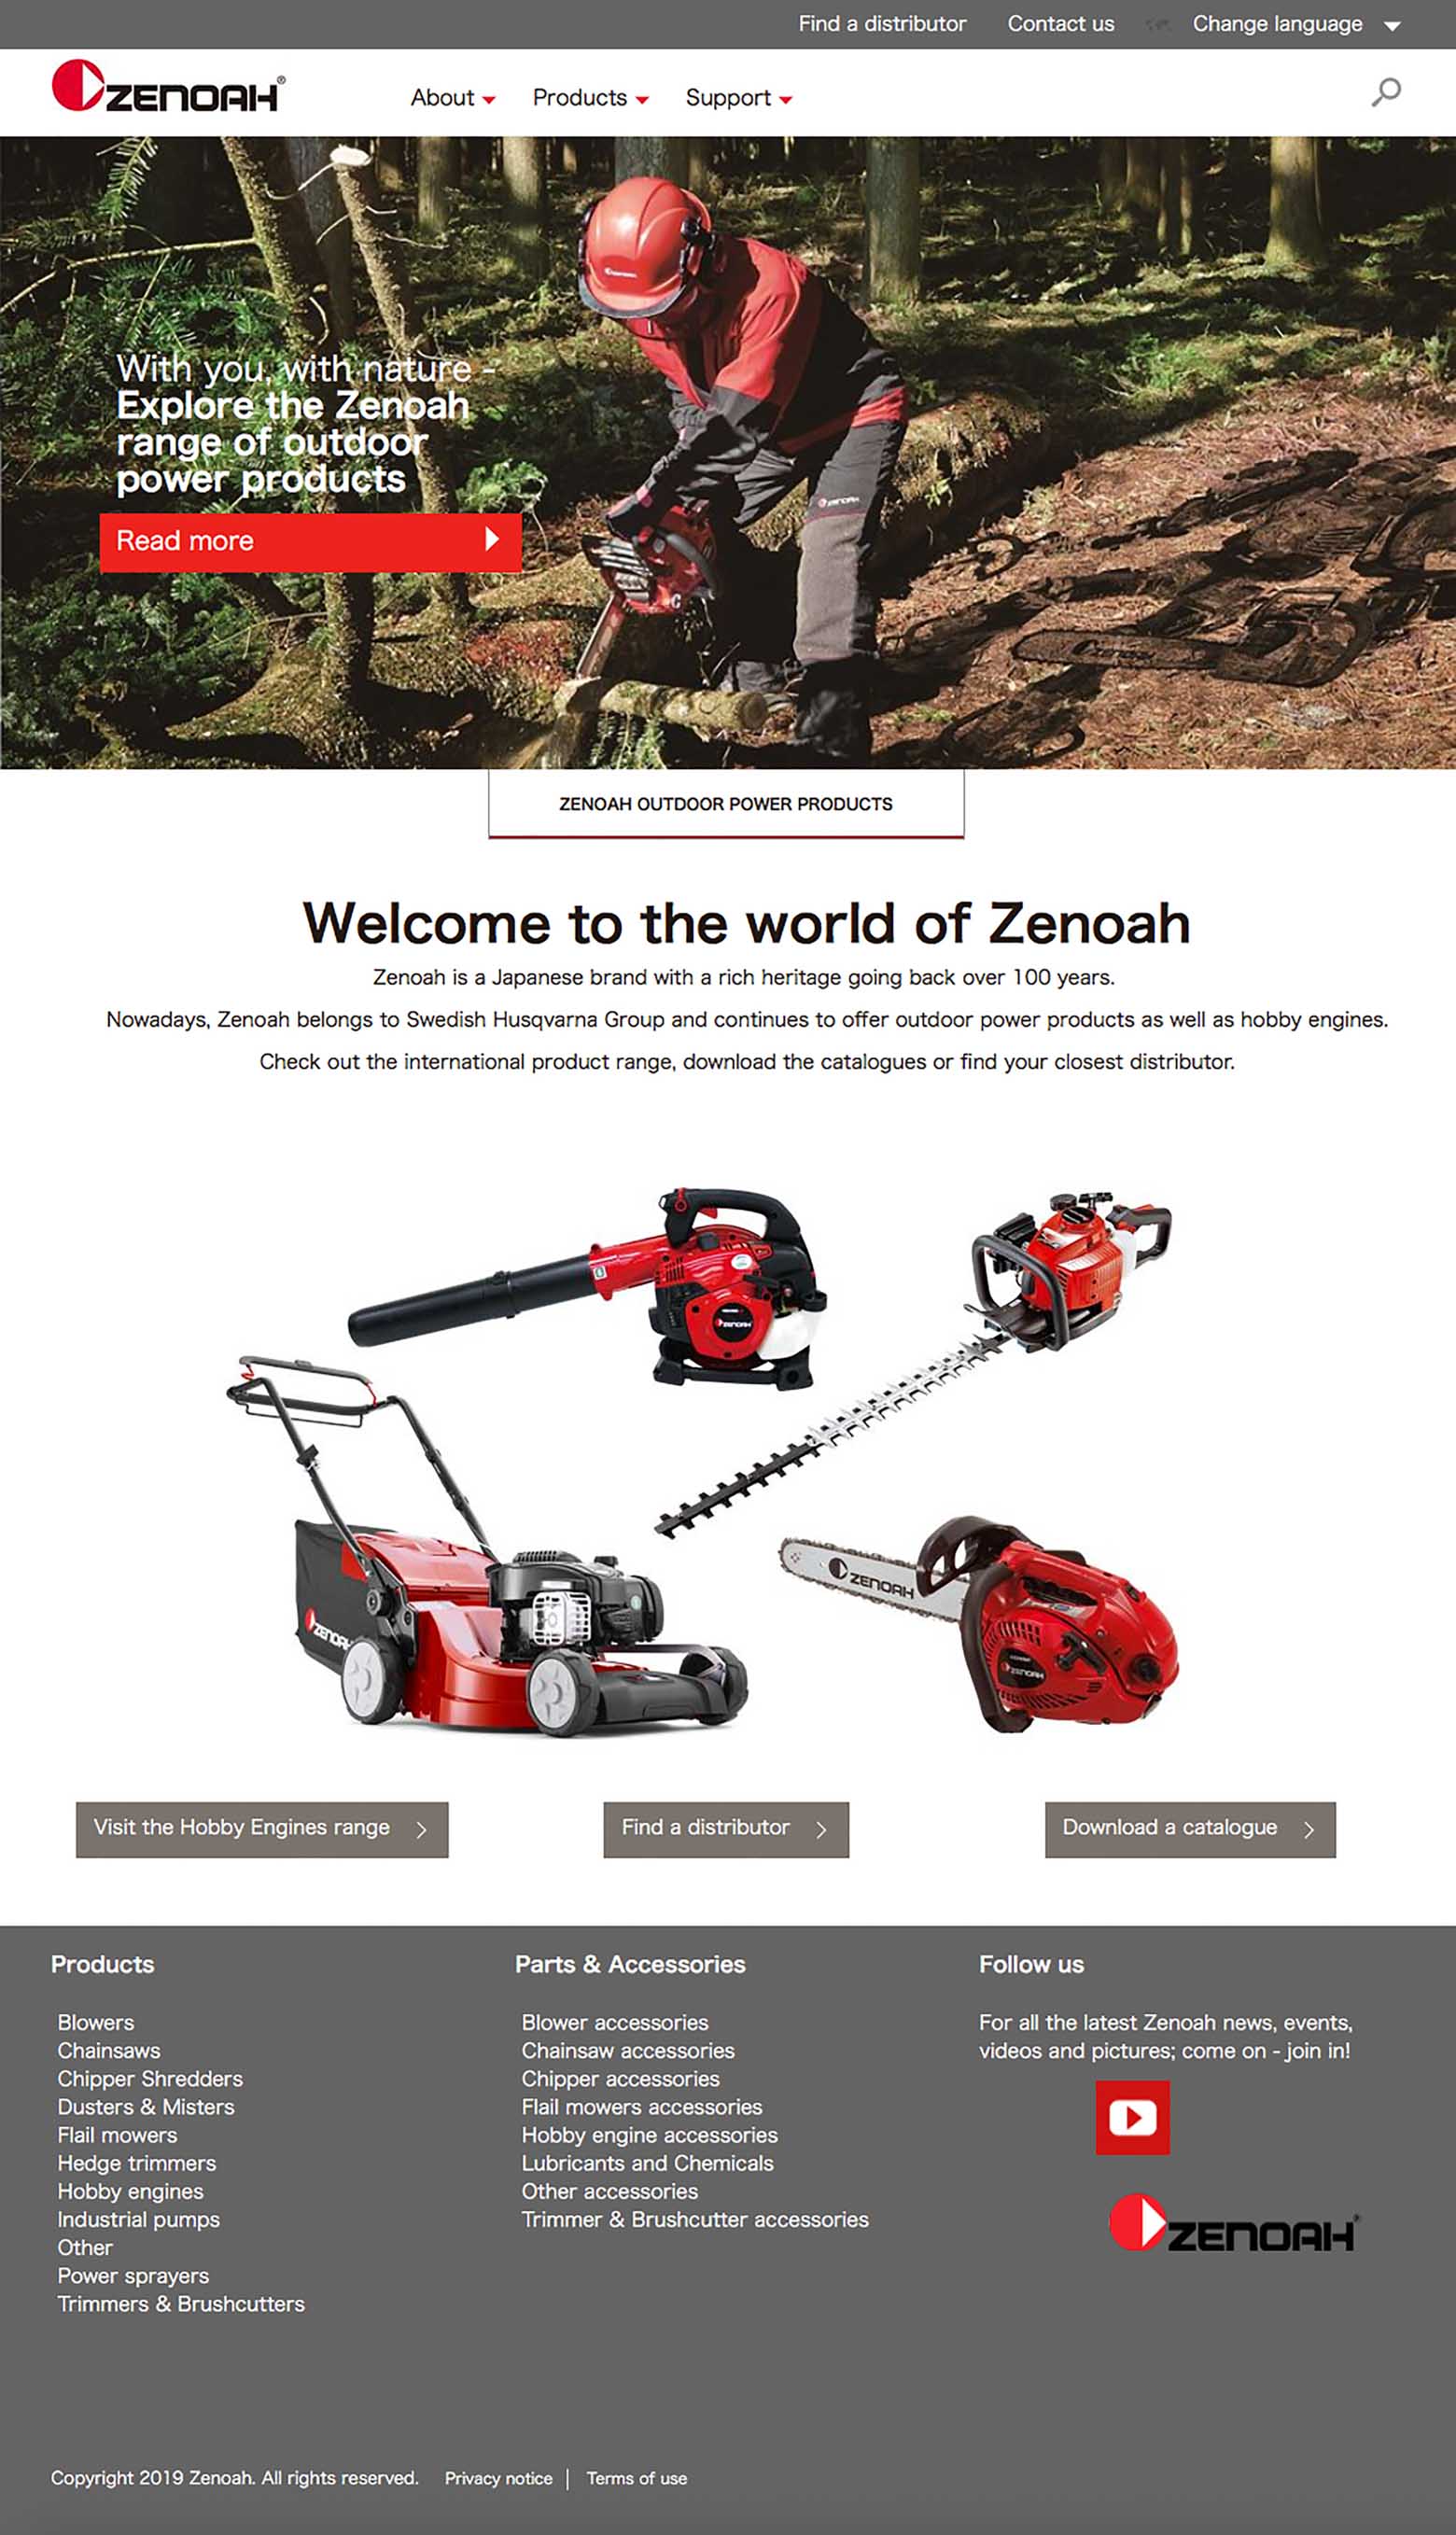 Zenoah - web site 2020 scan 01 main image